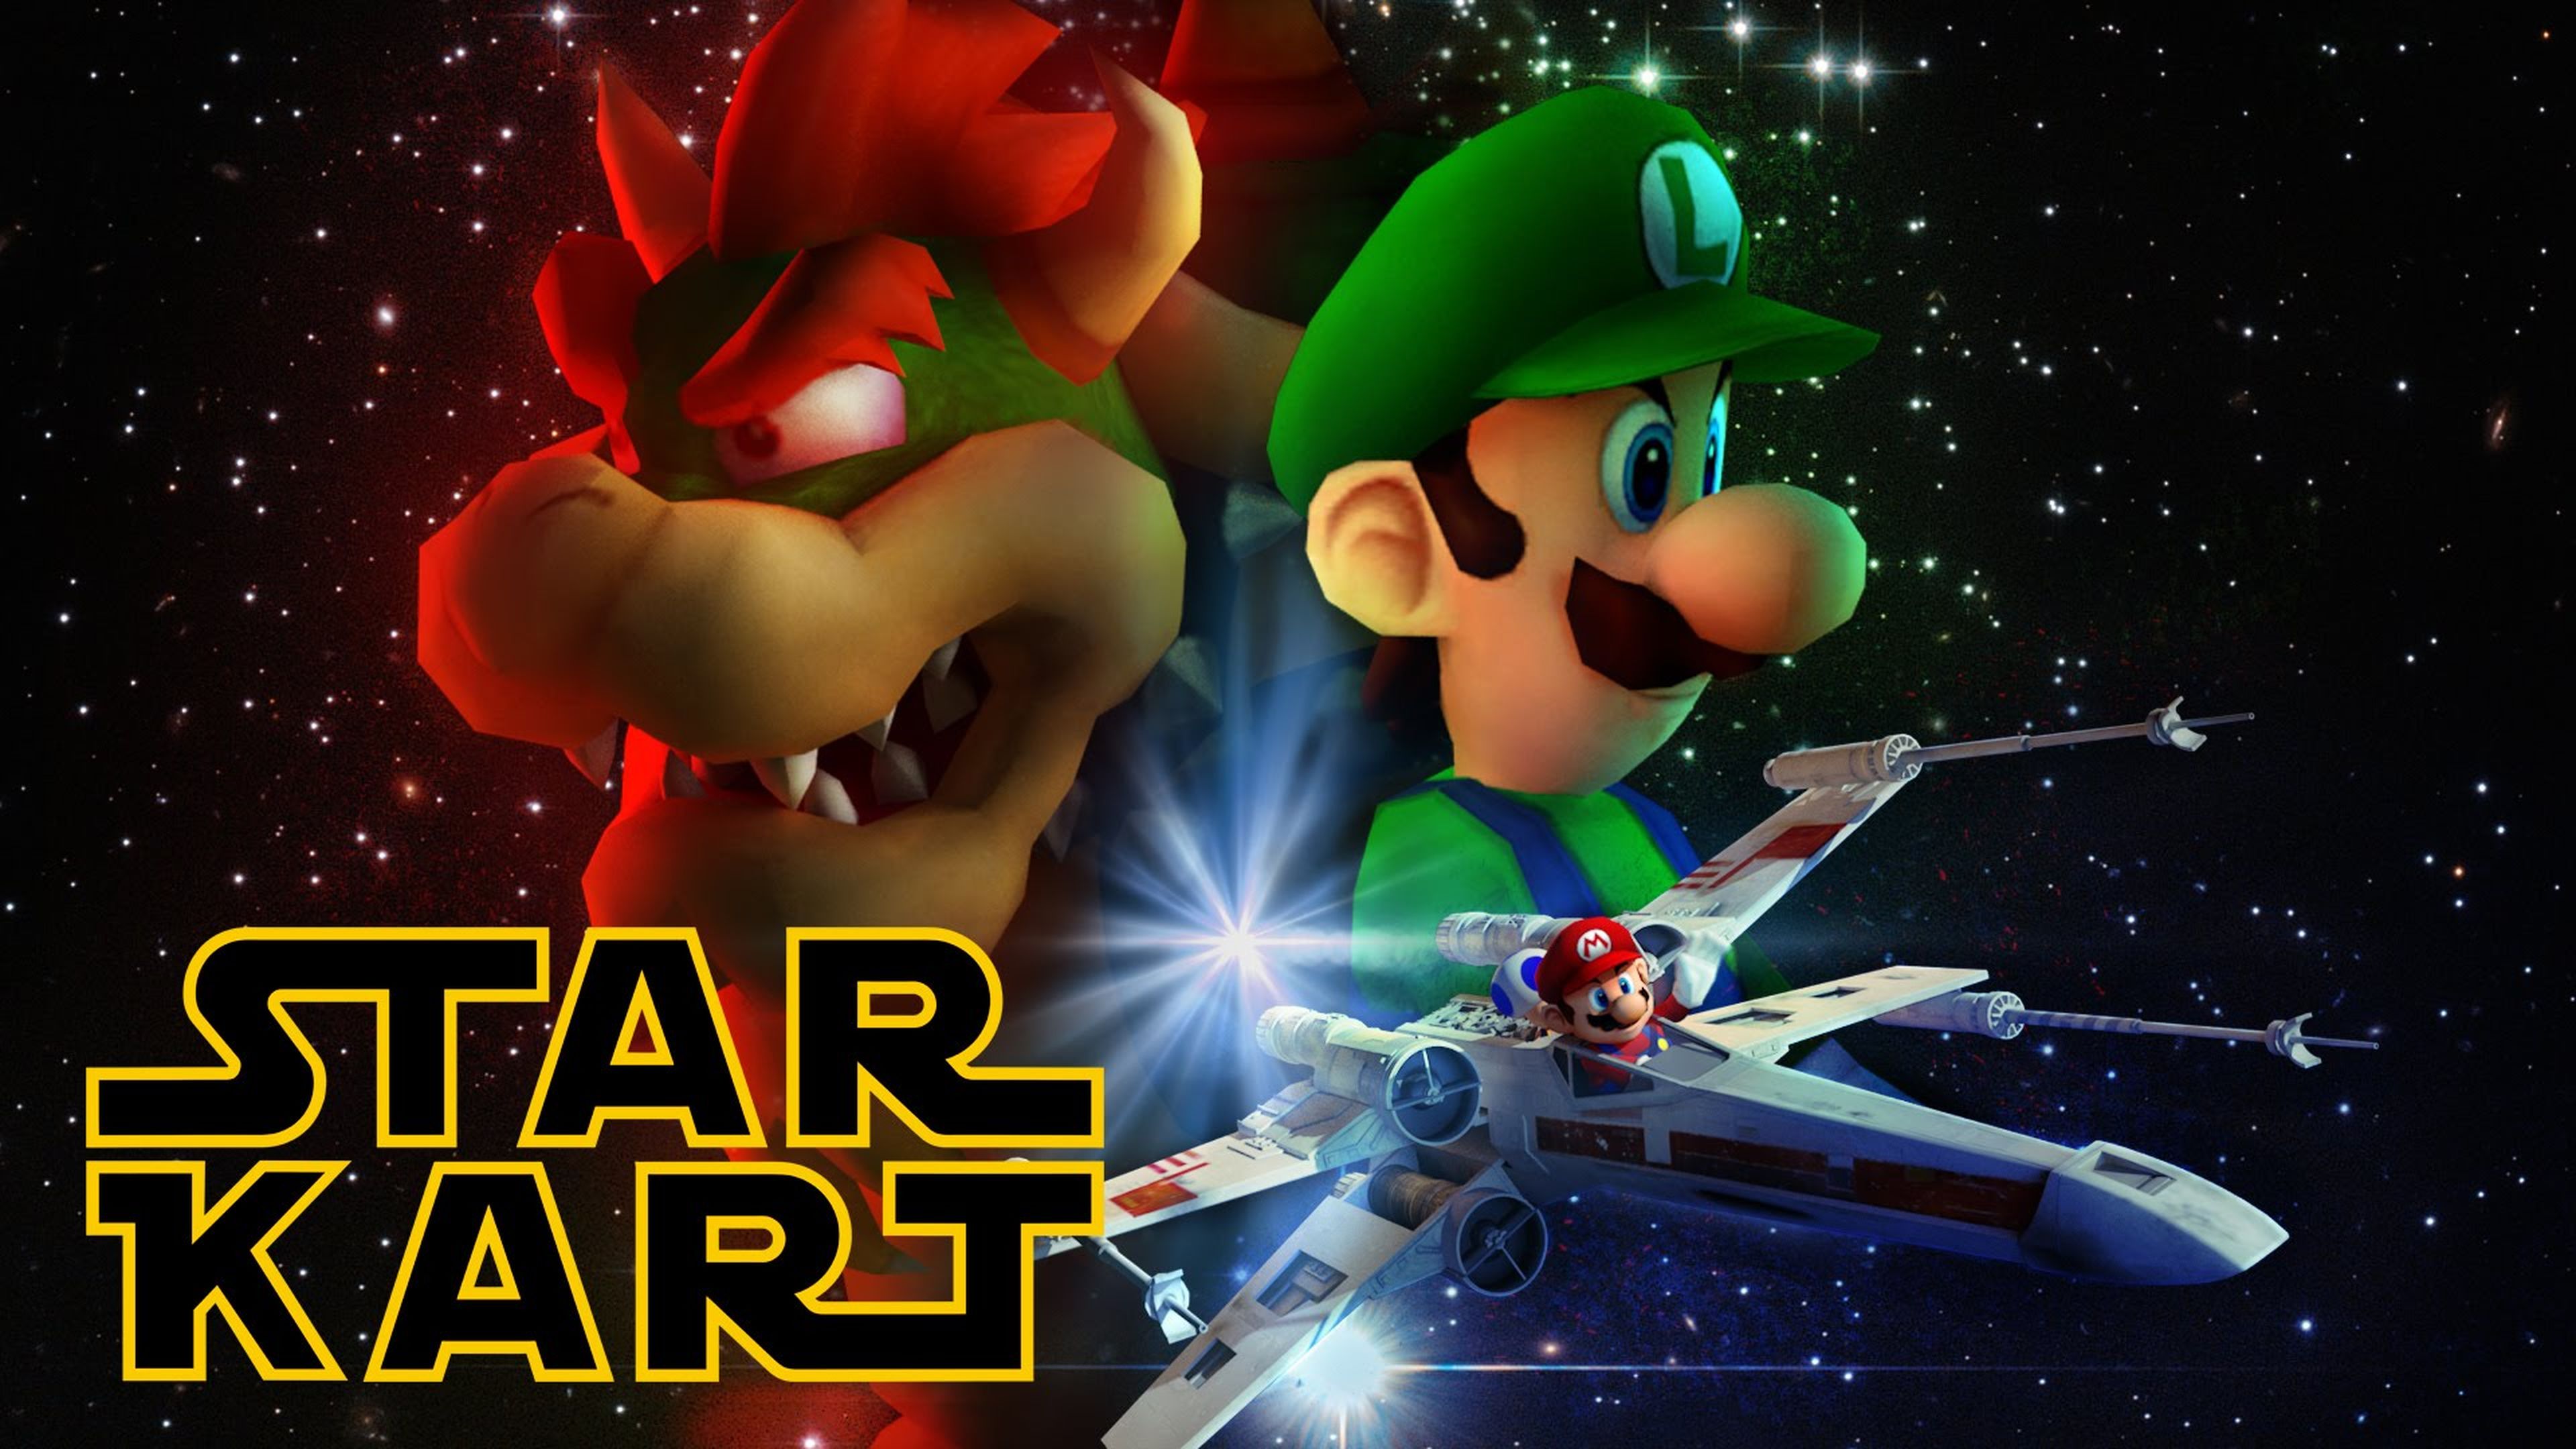 Star Wars vs Mario Kart